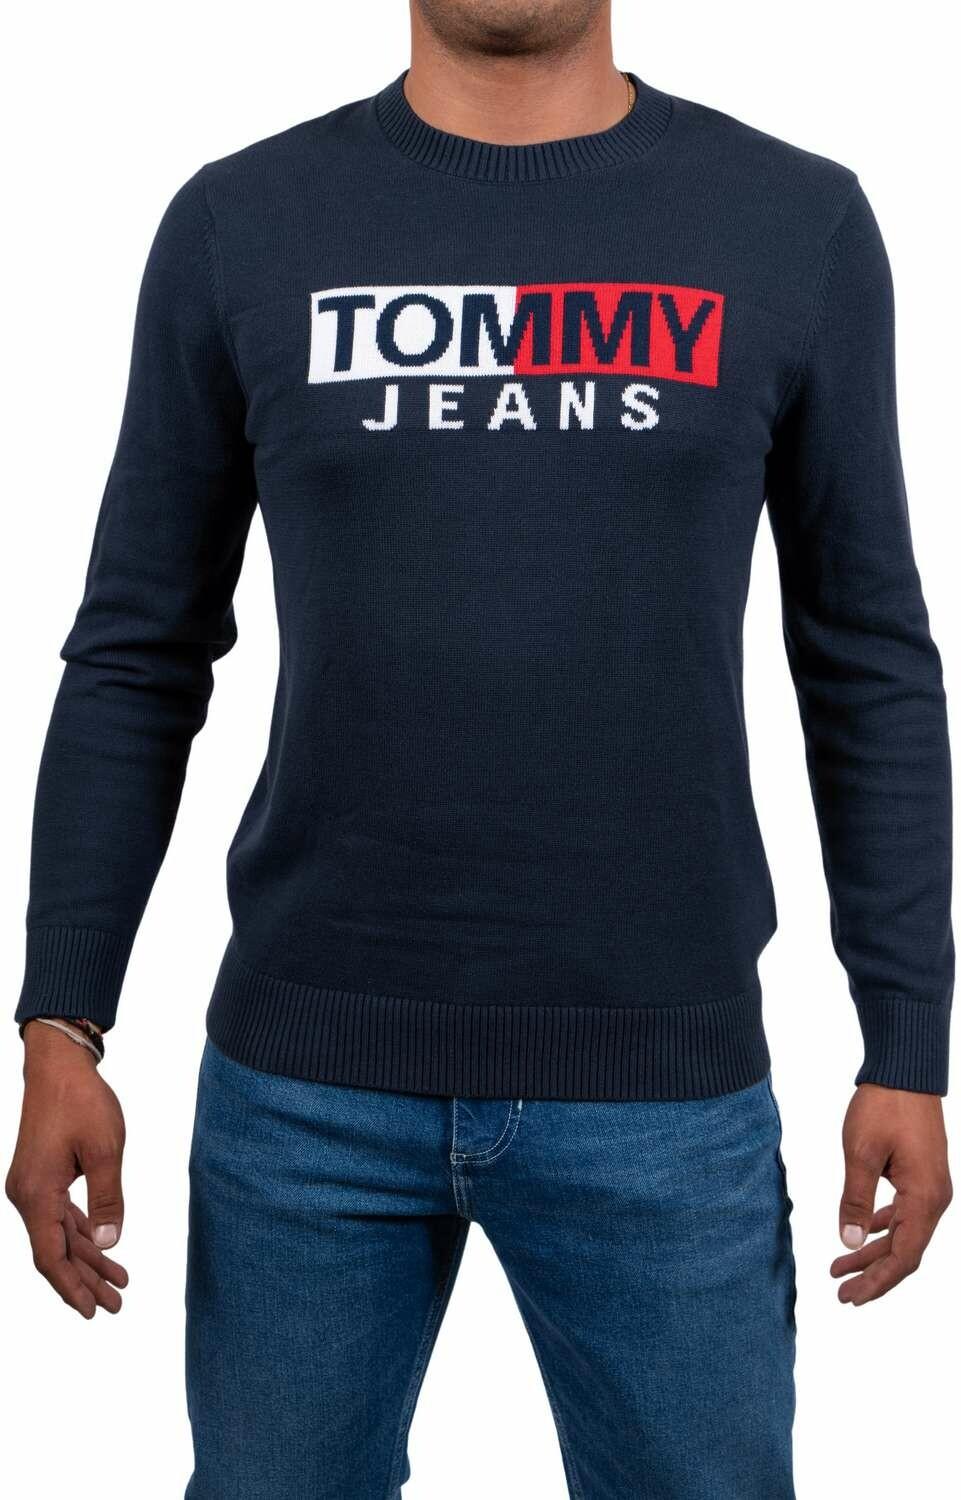 Tommy Hilfiger Men's Crewneck Sweater